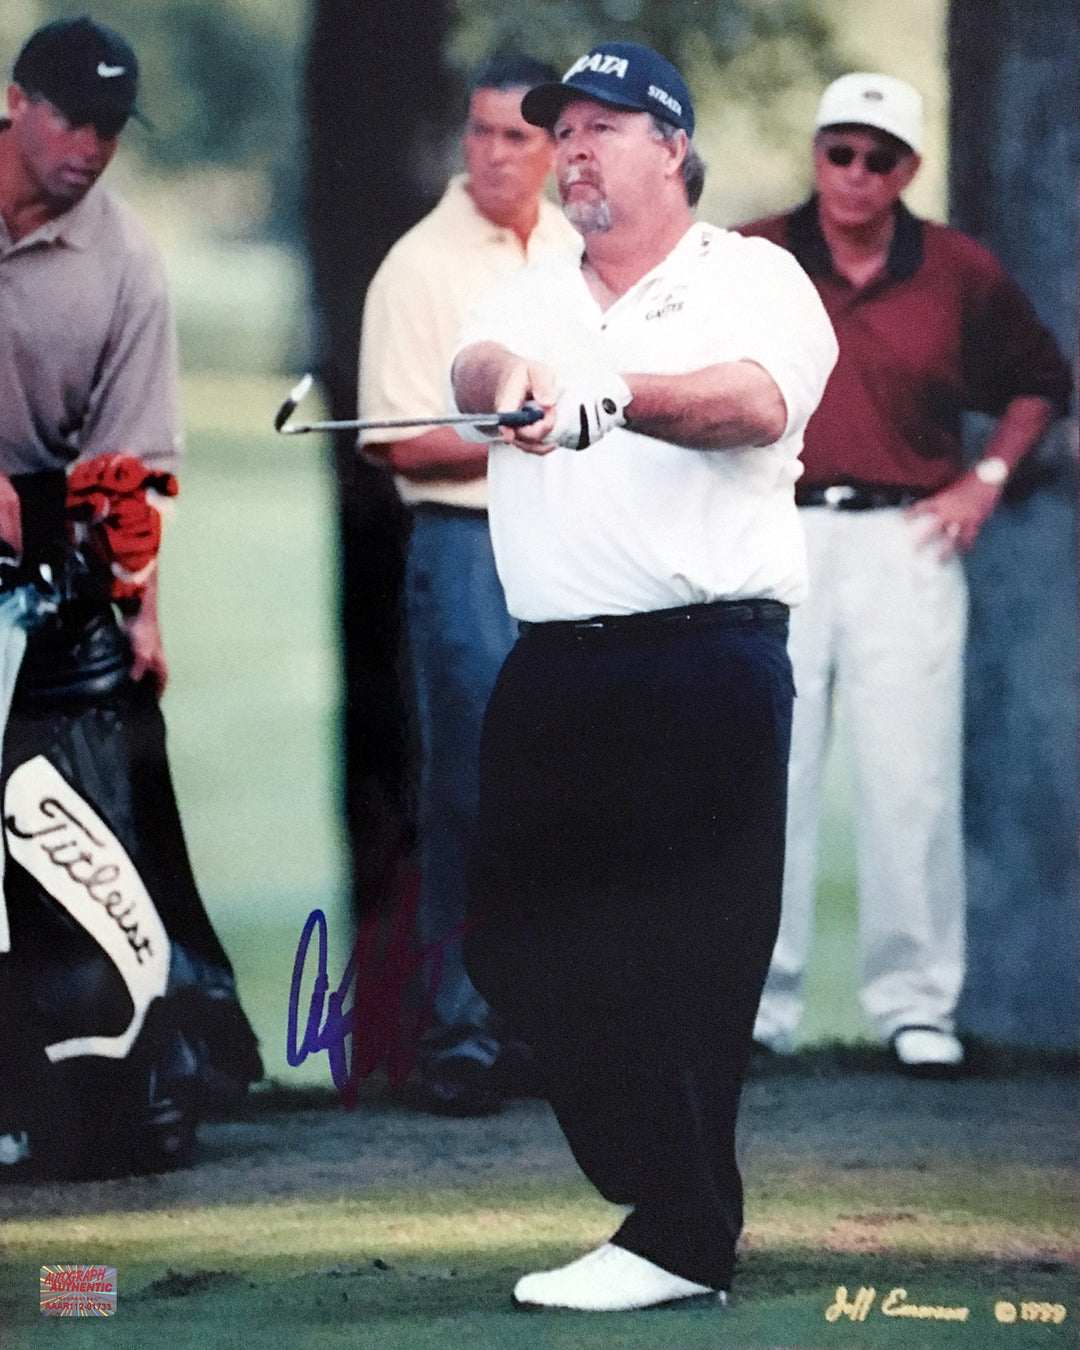 Craig Stadler Autographed 8X10 Photo - Golfer, Golfer, PGA, Golf, Autographed, Signed, AAOCG31808